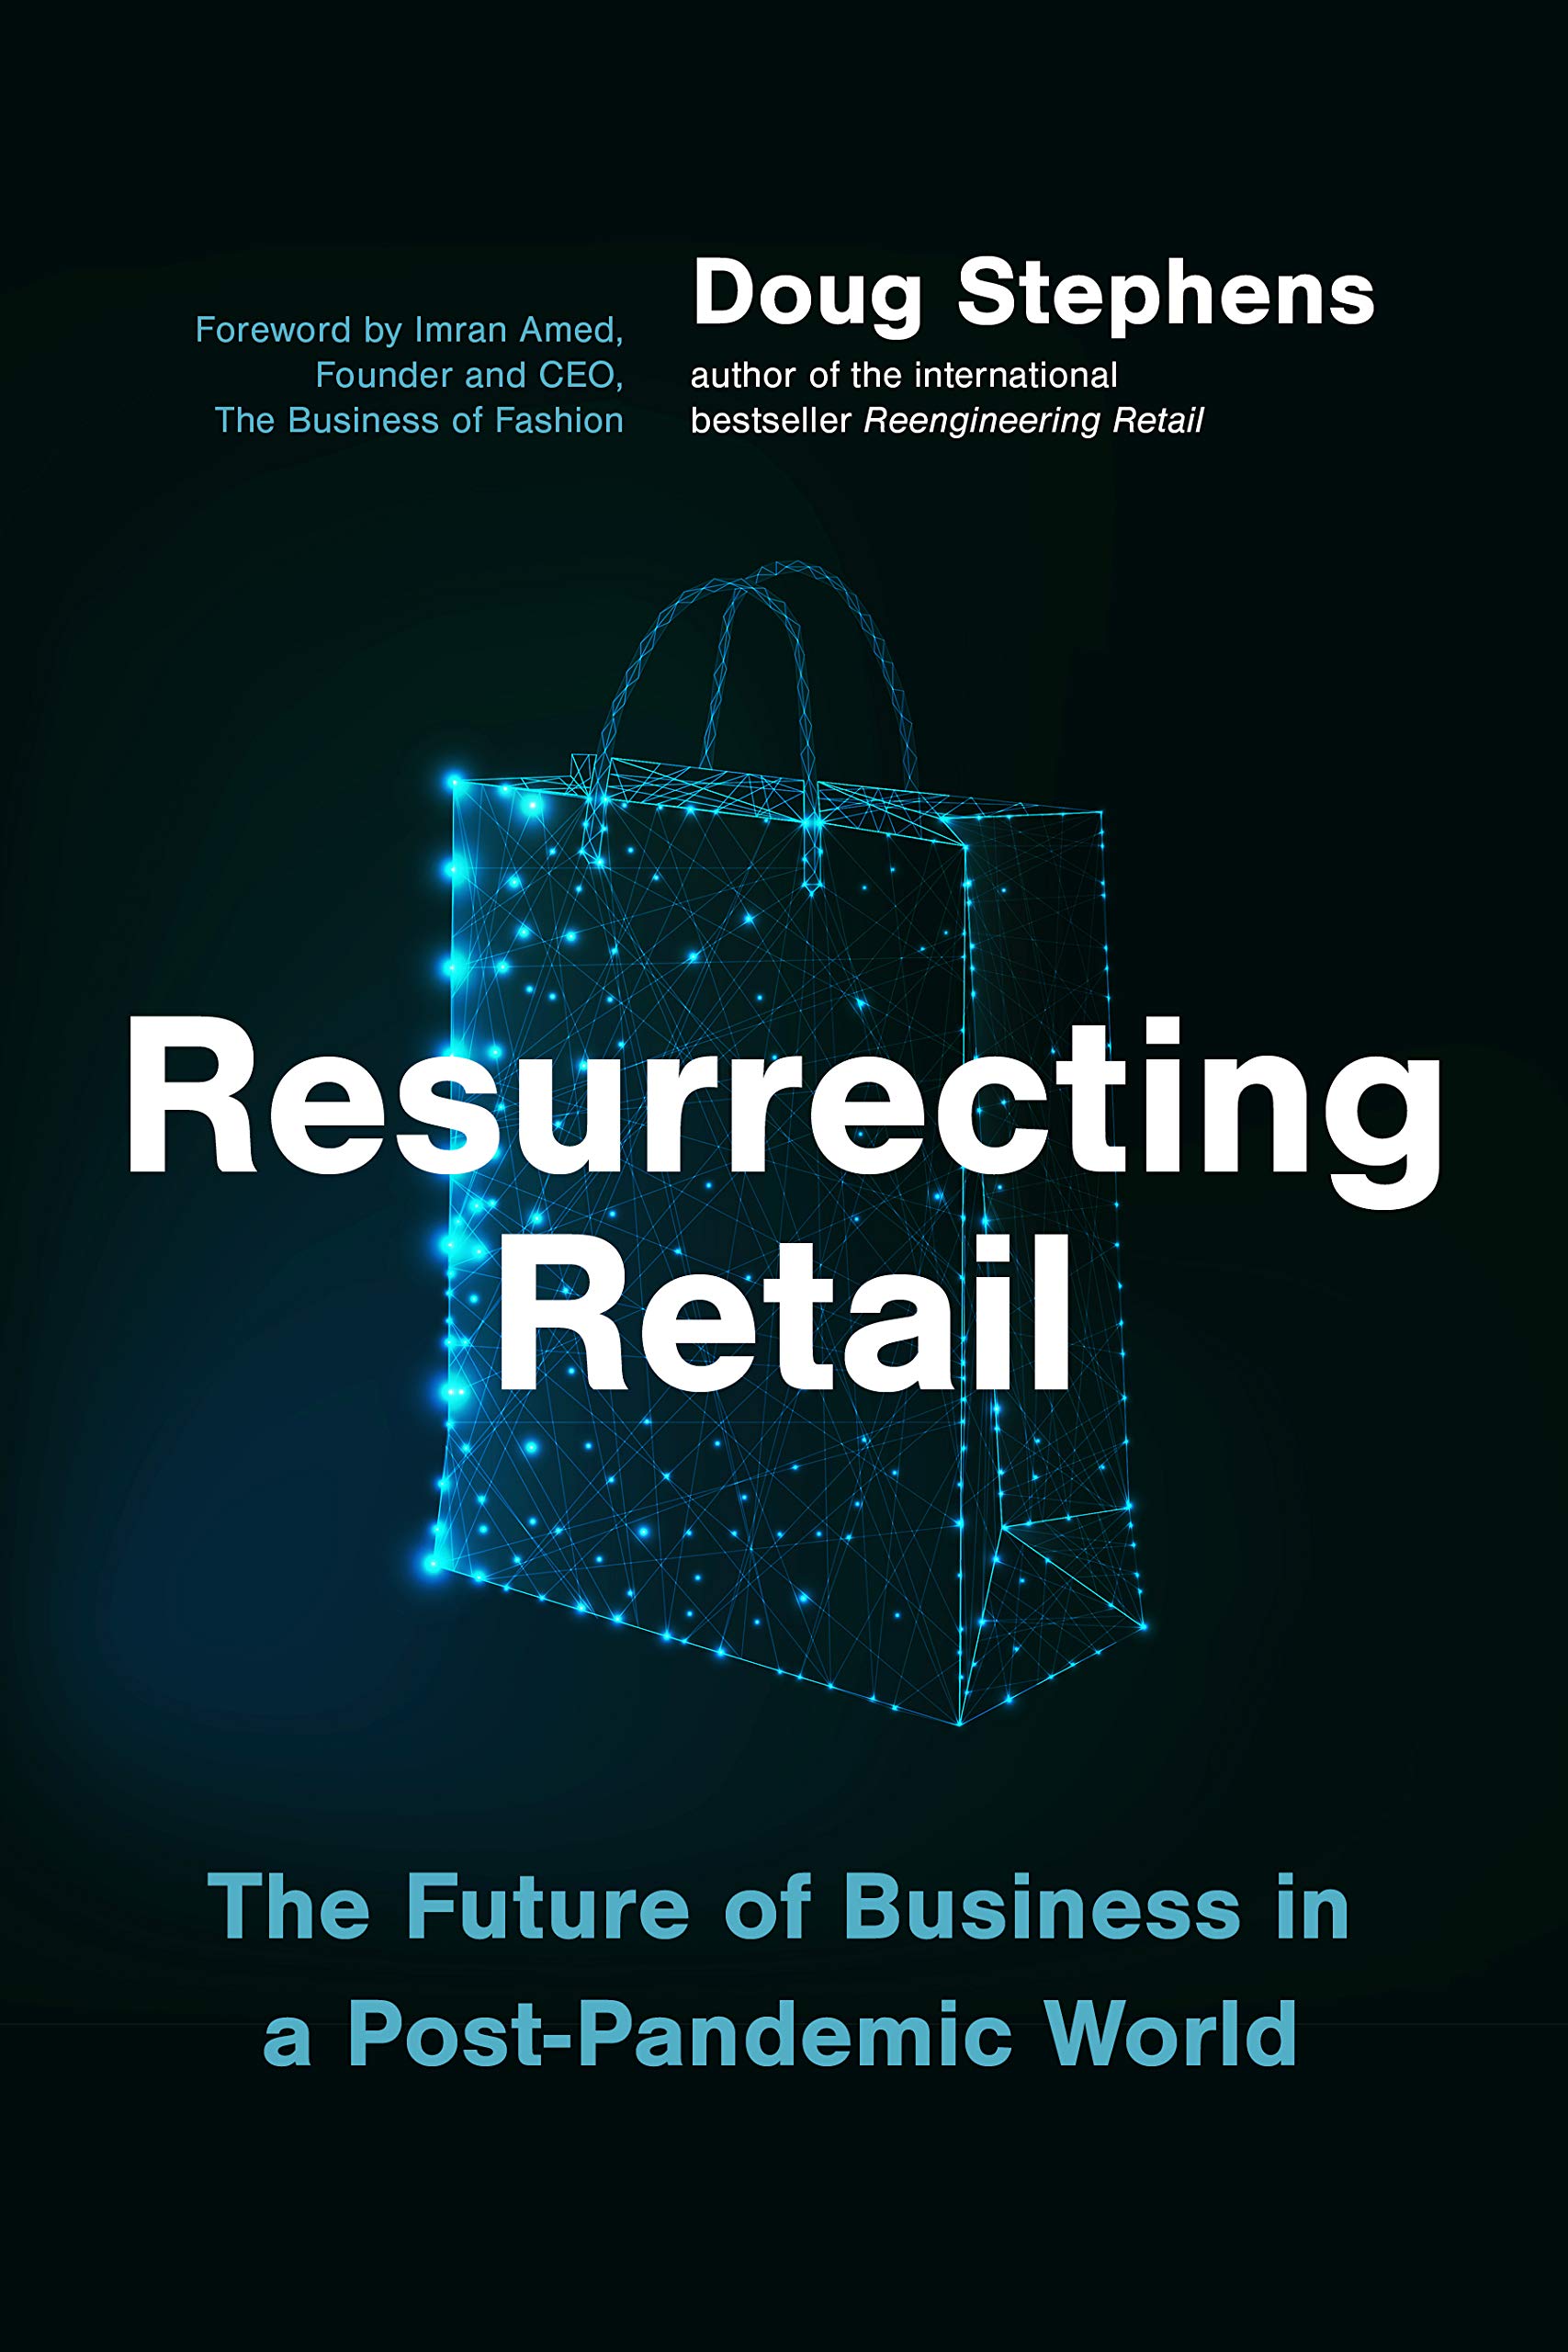 Doug Stephens ‒ Resurrecting Retail (Figure 1 Publishing Inc., Vancouver 2021)